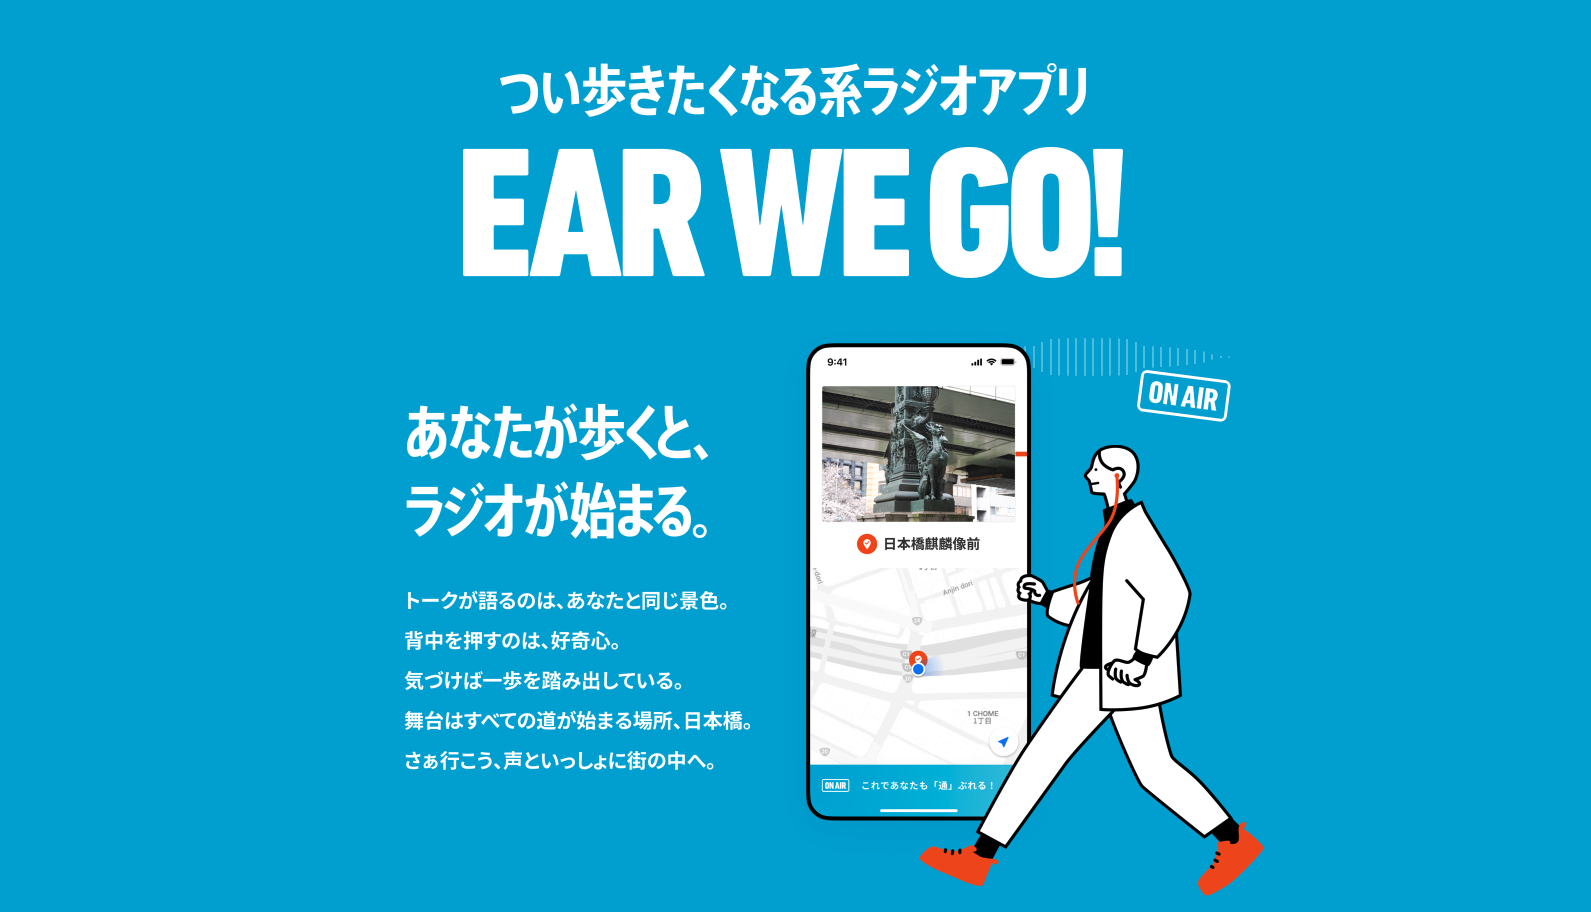 TBSラジオのアプリ「EAR WE GO!」、ACC TOKYO CREATIVITY AWARDSでブロンズ賞受賞